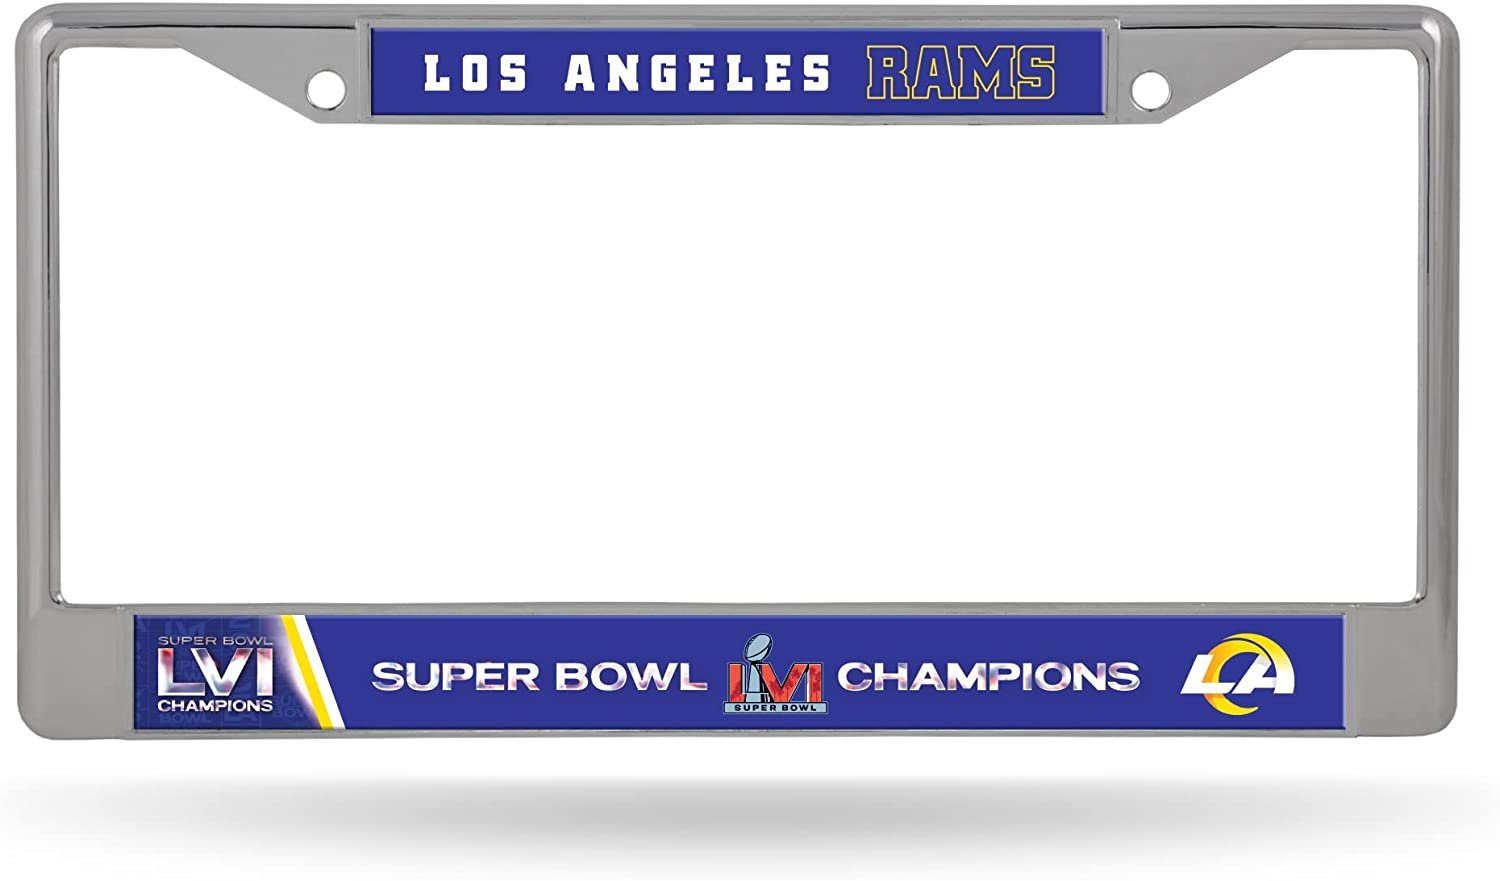 Los Angeles Rams 2022 Super Bowl LVI Champions Metal License Plate Frame Chrome Tag Cover, 12x6 Inch